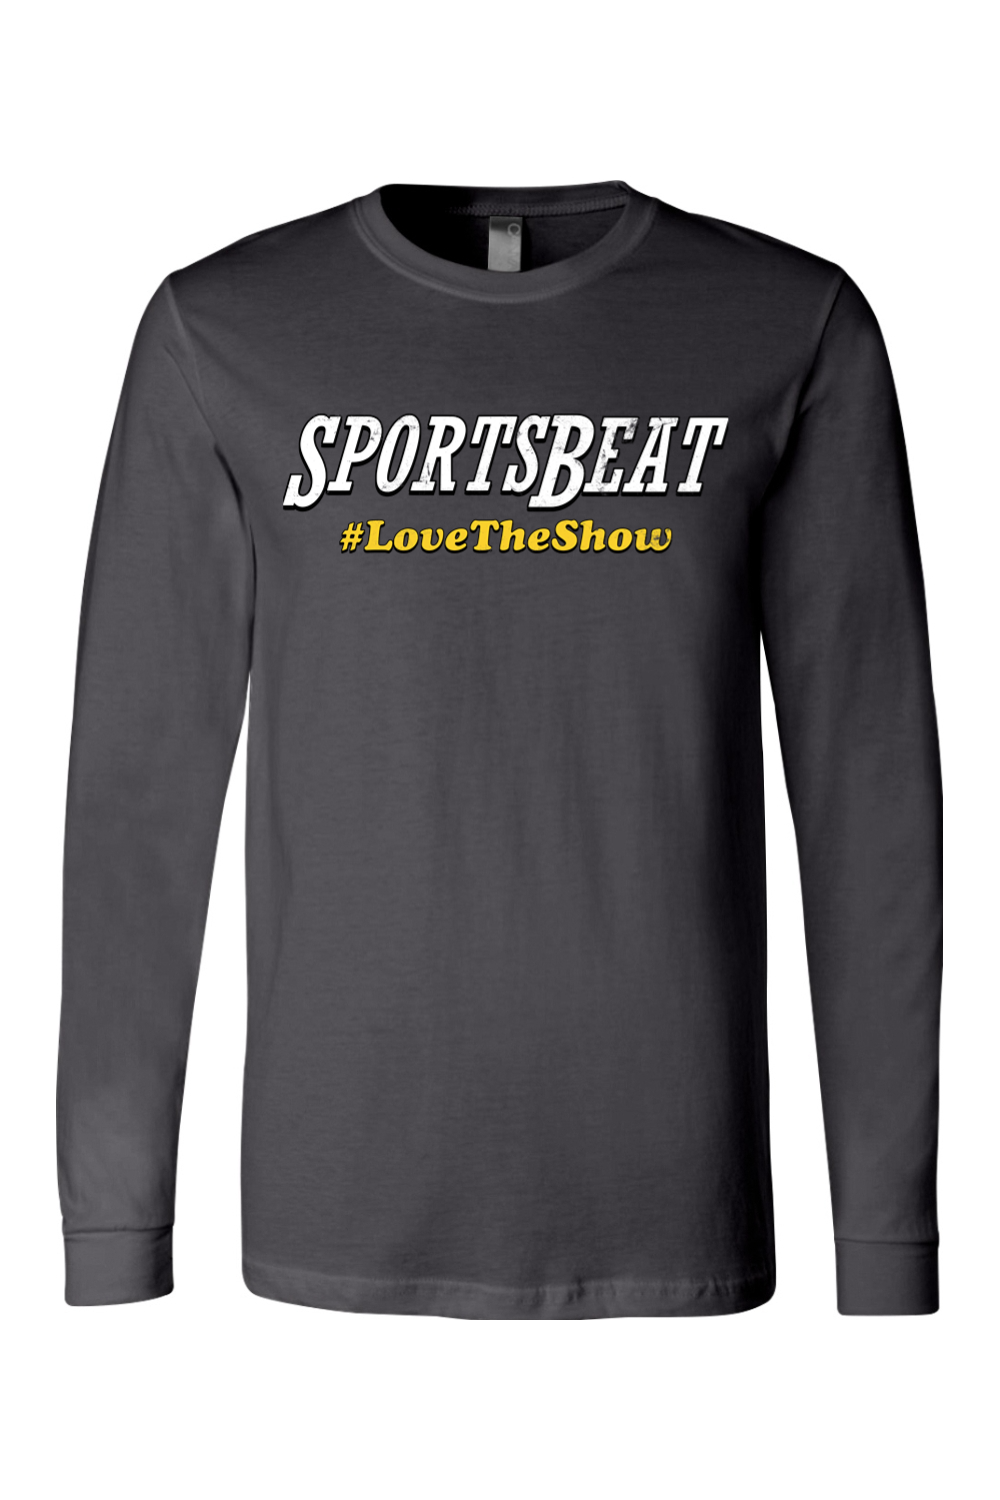 SportsBeat - #LoveTheShow - Long Sleeve Tee - Yinzylvania